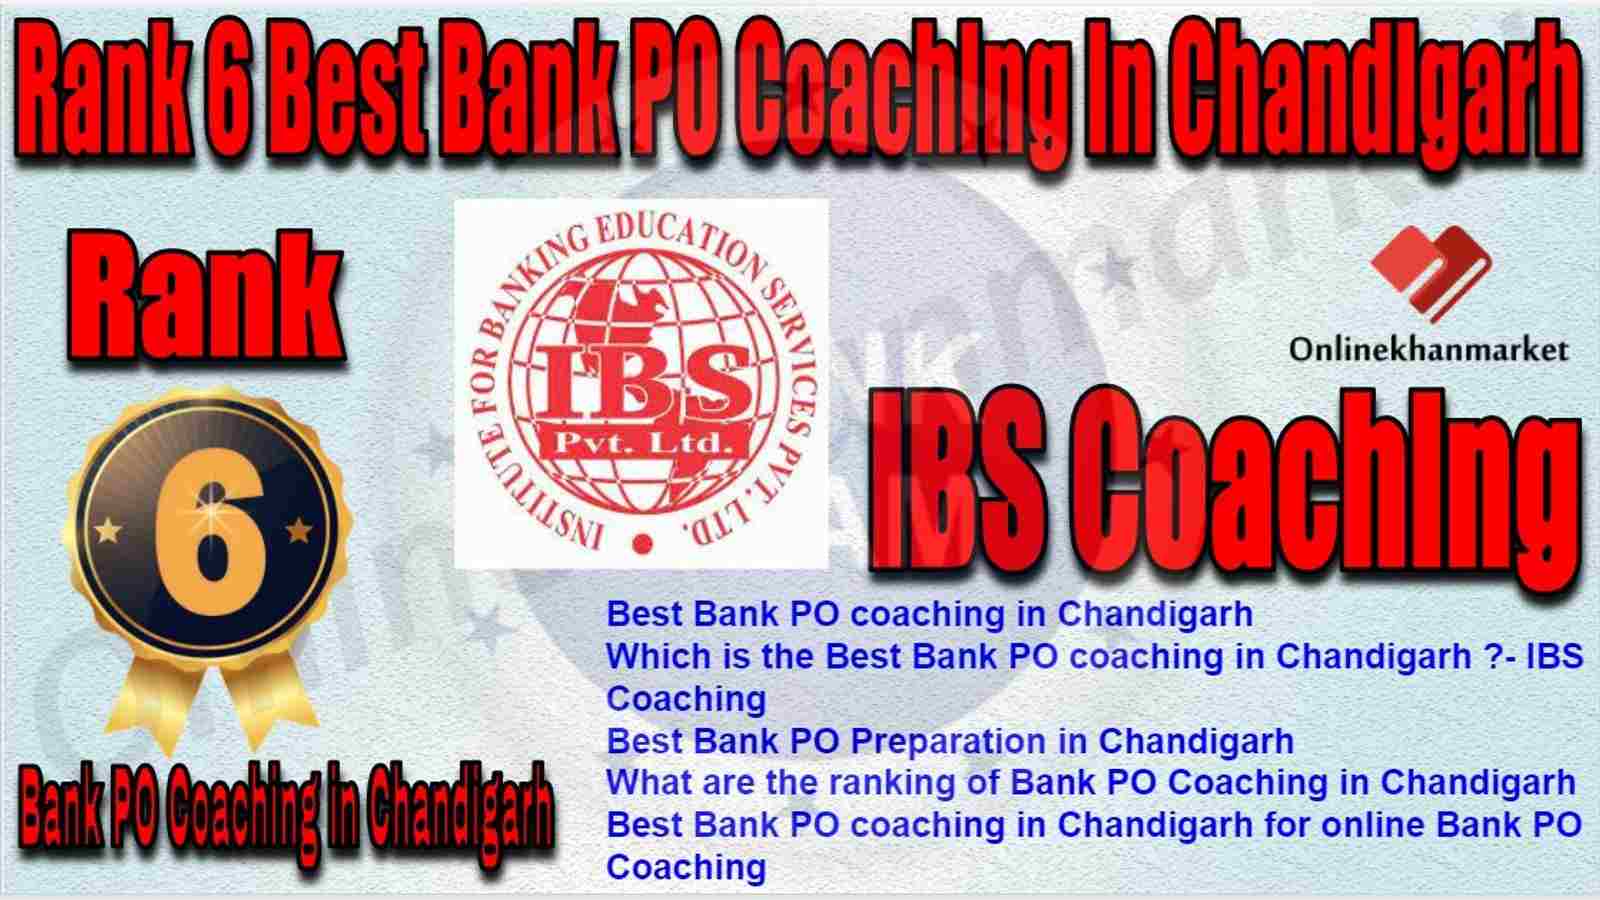 Rank 6 Best Bank PO Coaching in Chandigarh